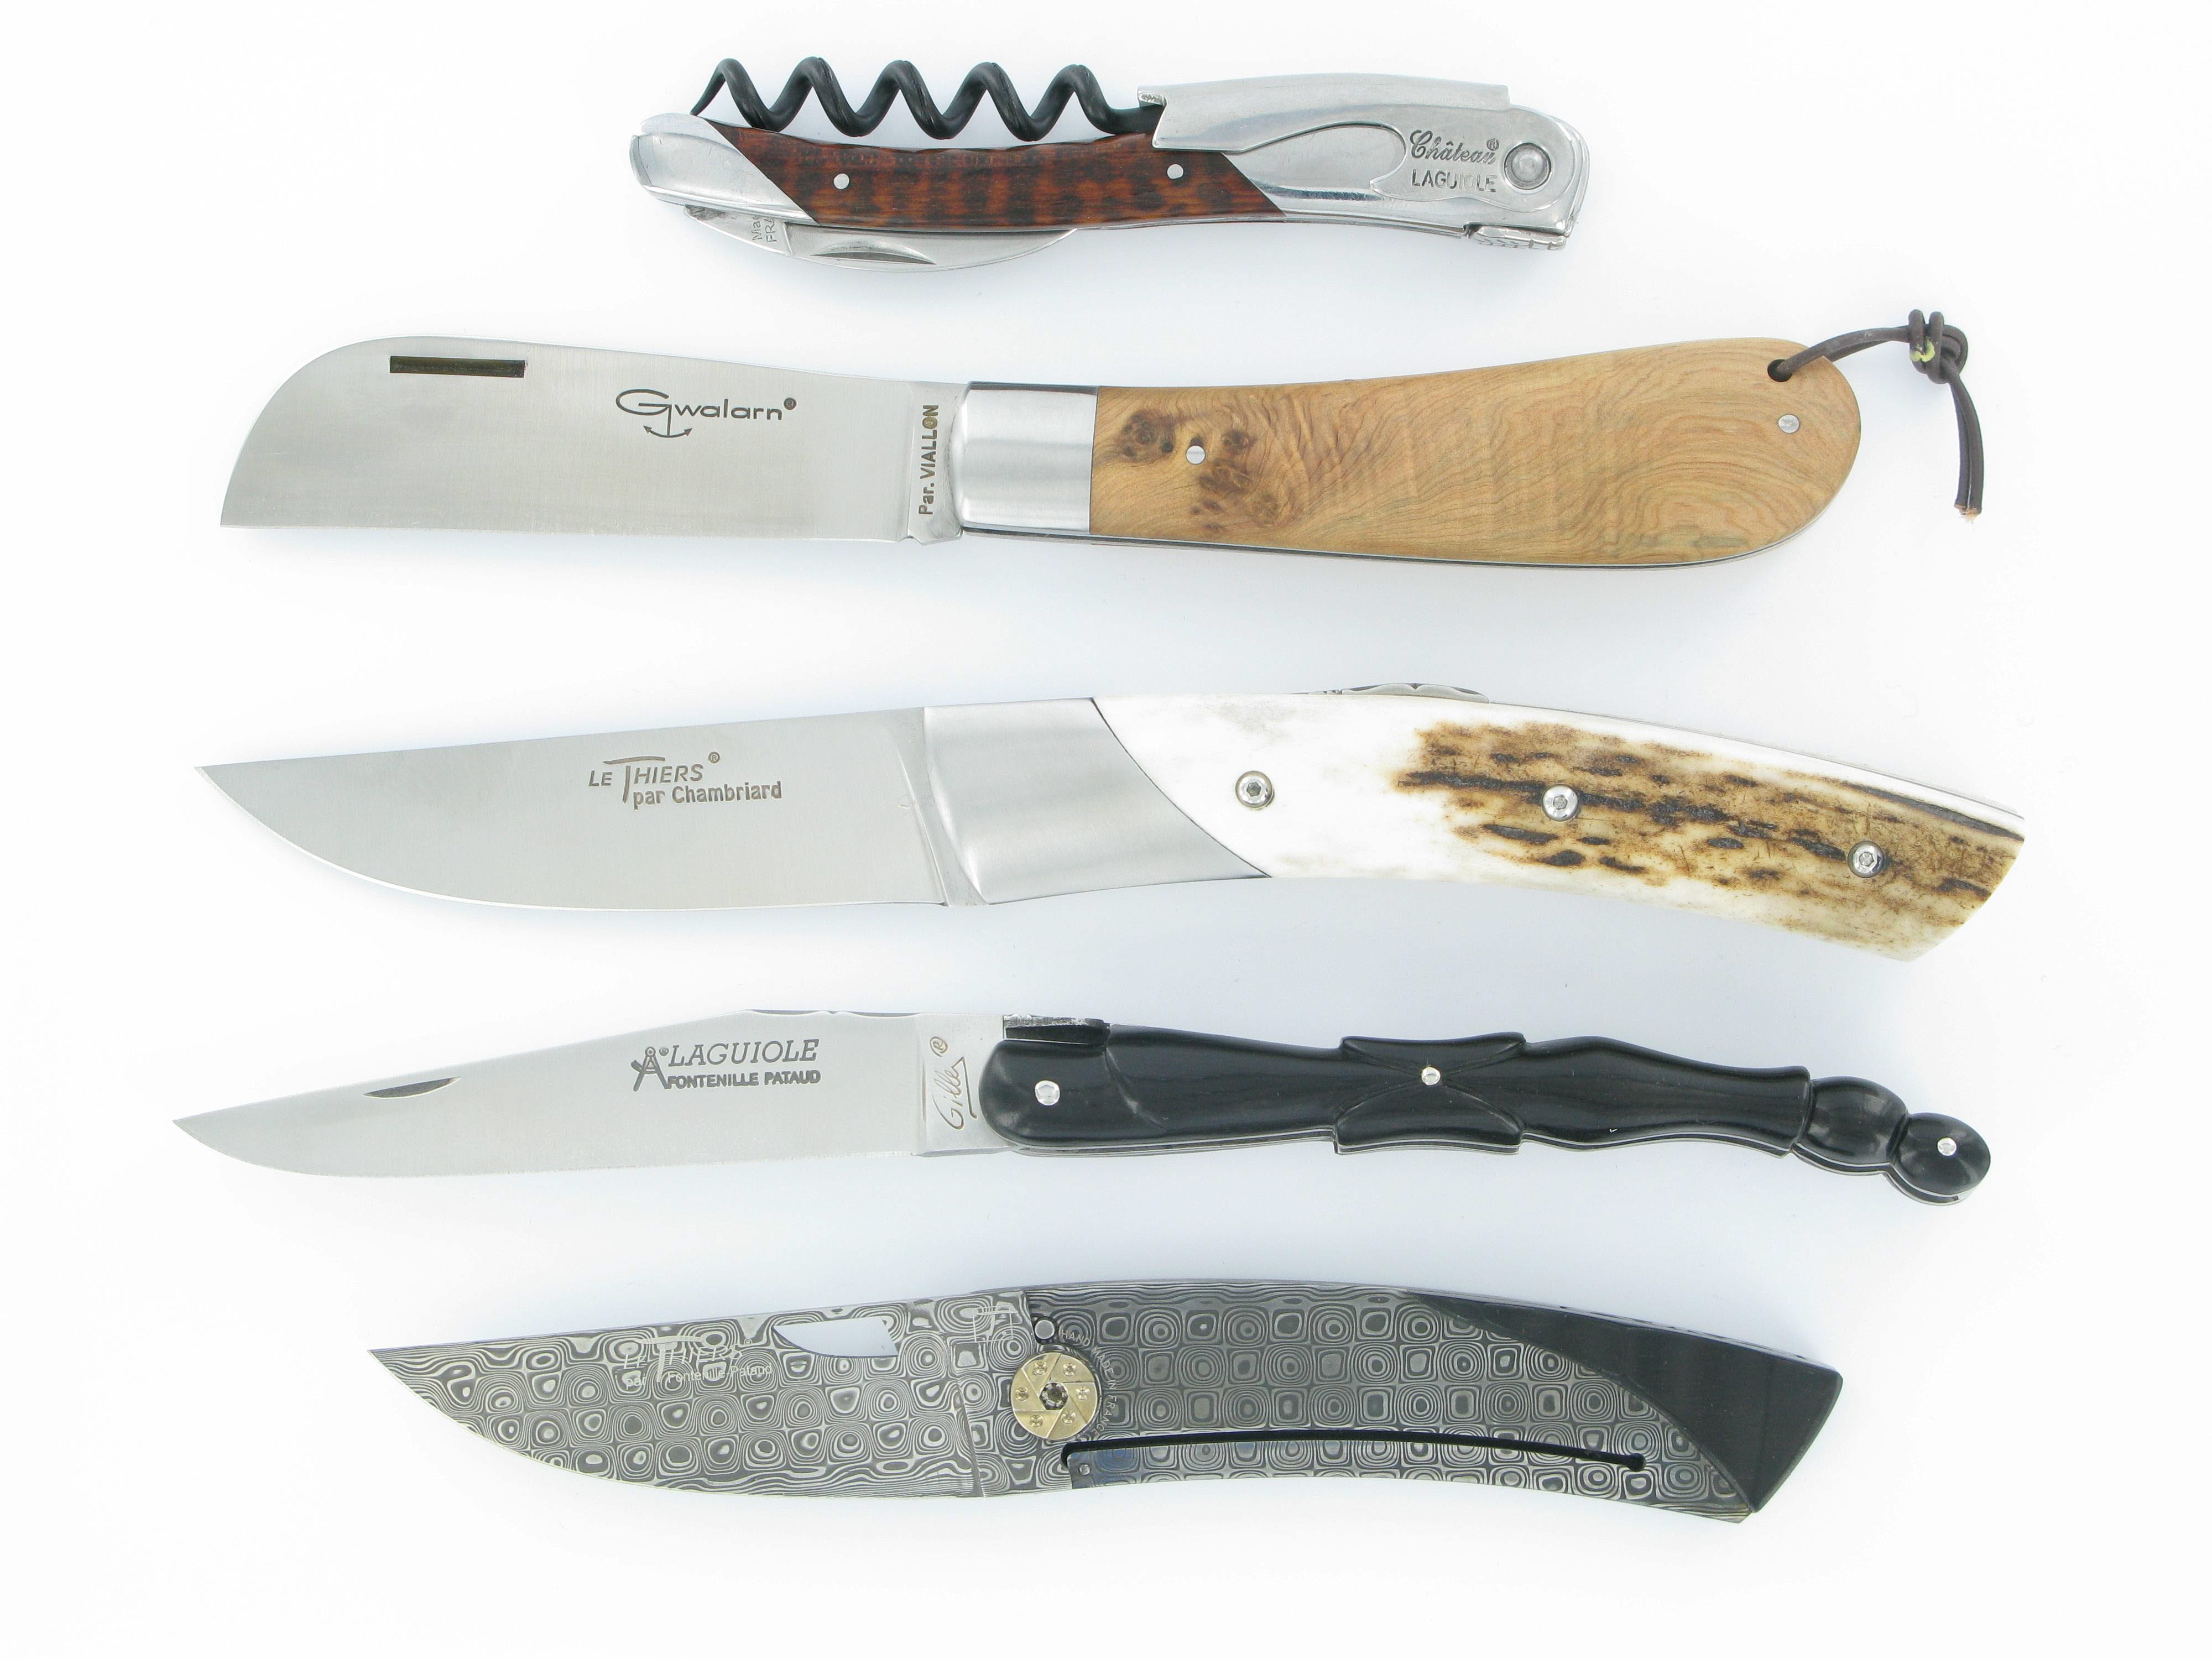 Pocket knives from Sabatier K